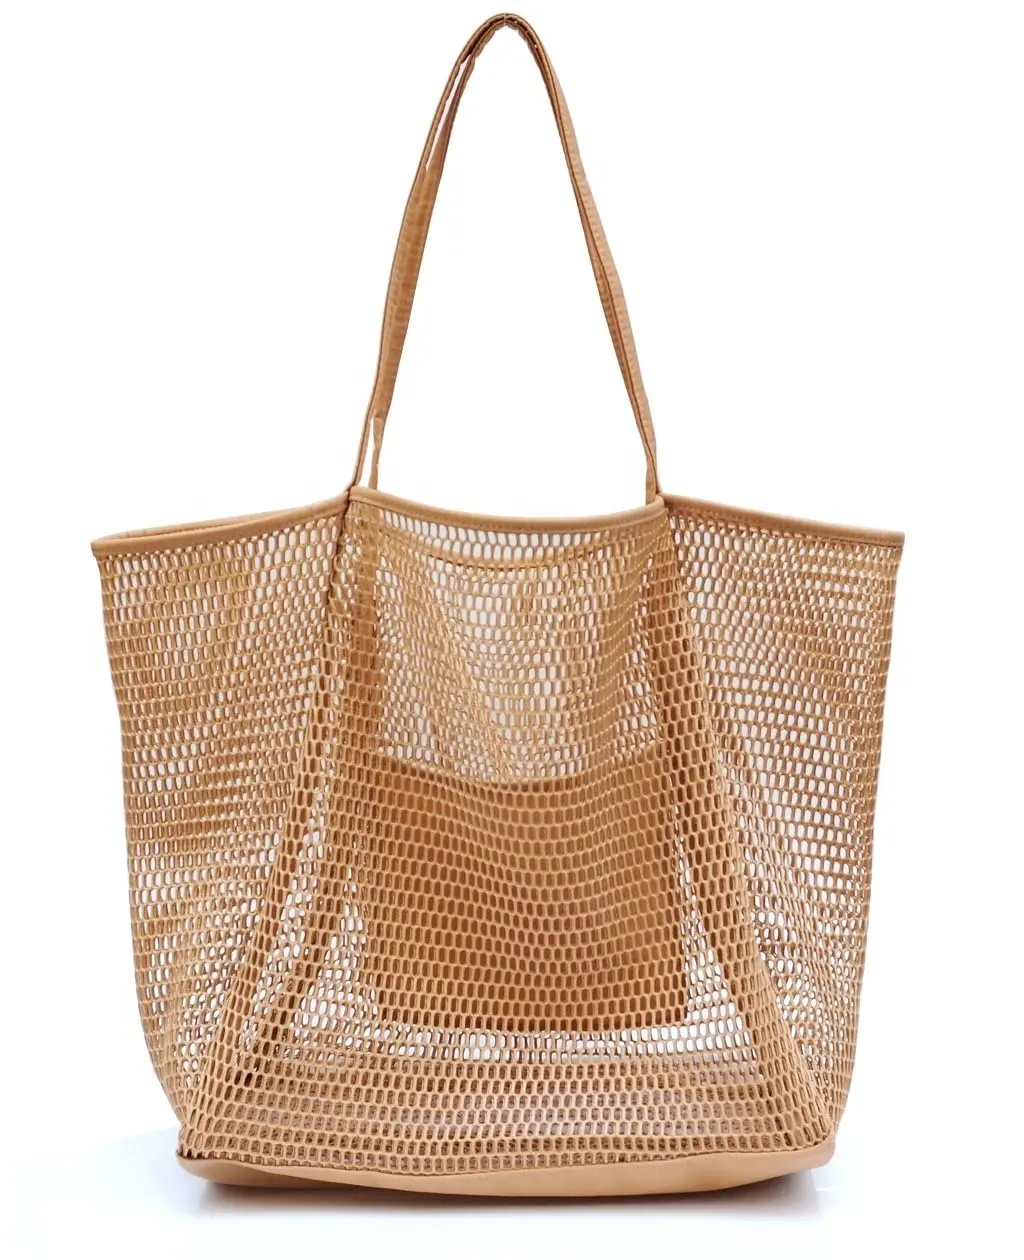 2023 Portable Mesh Nylon Beach Tote Bag Casual Lightweight Handbag Foldable waterproof Women Shoulder Bag for Travel shopping